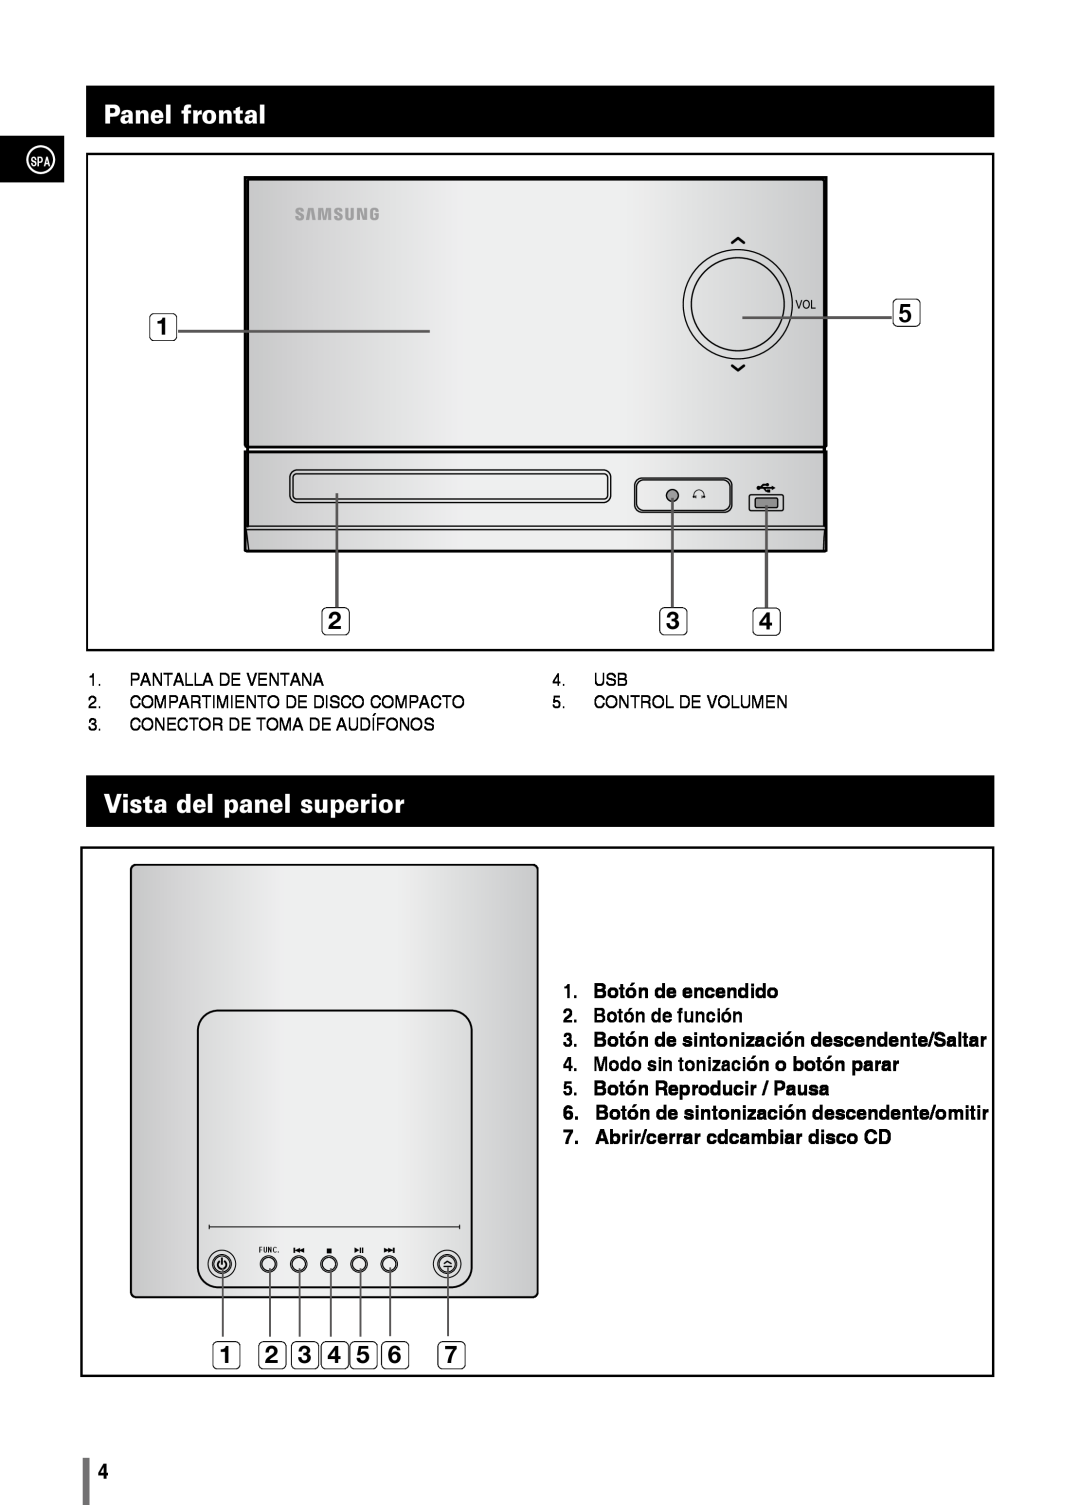 Samsung MM-C330/XEF manual Panel frontal, Vista del panel superior, Botón de encendido 2. Botón de función, Func 